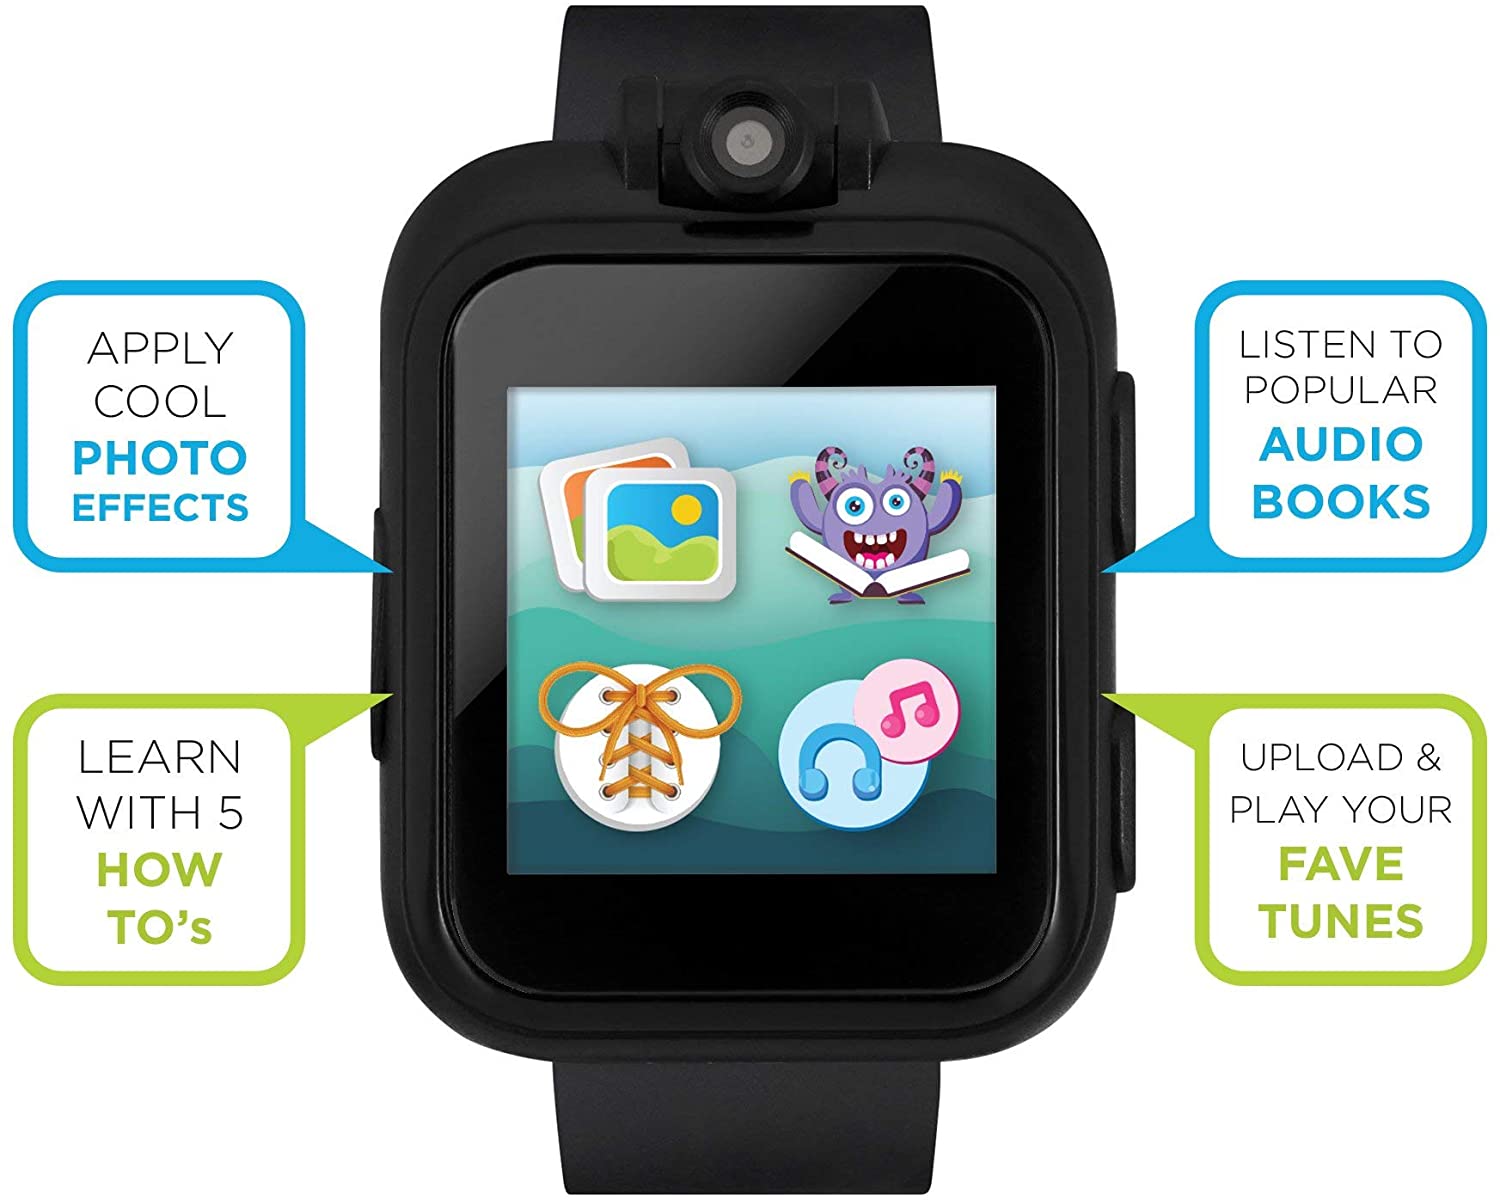 PlayZoom 2 Kids Smartwatch & Earbuds Set: Solid Black